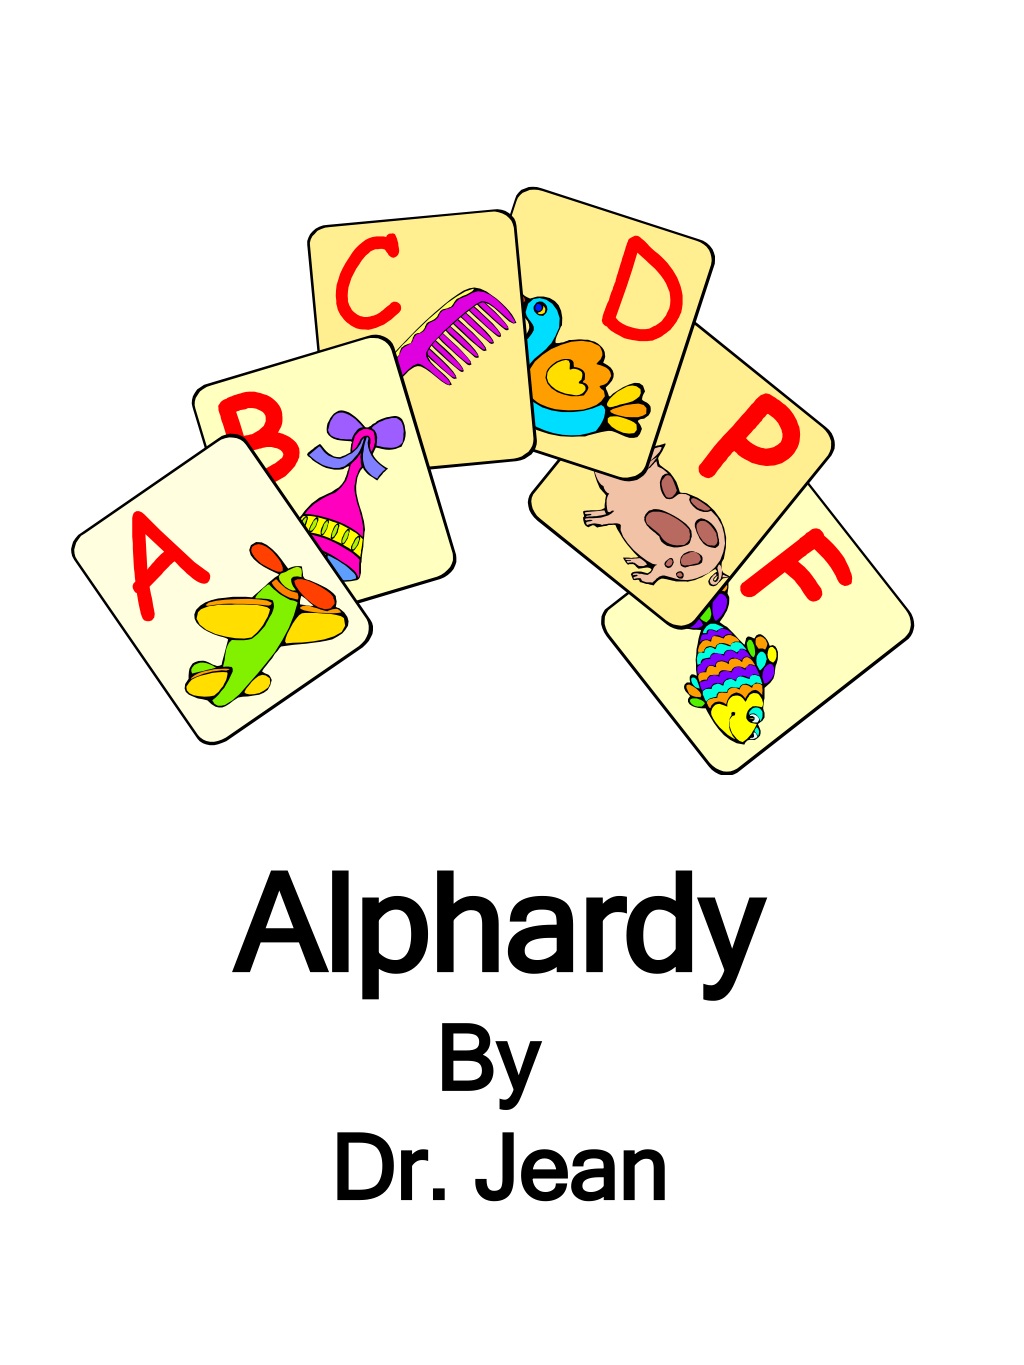 Alphardy dr jean